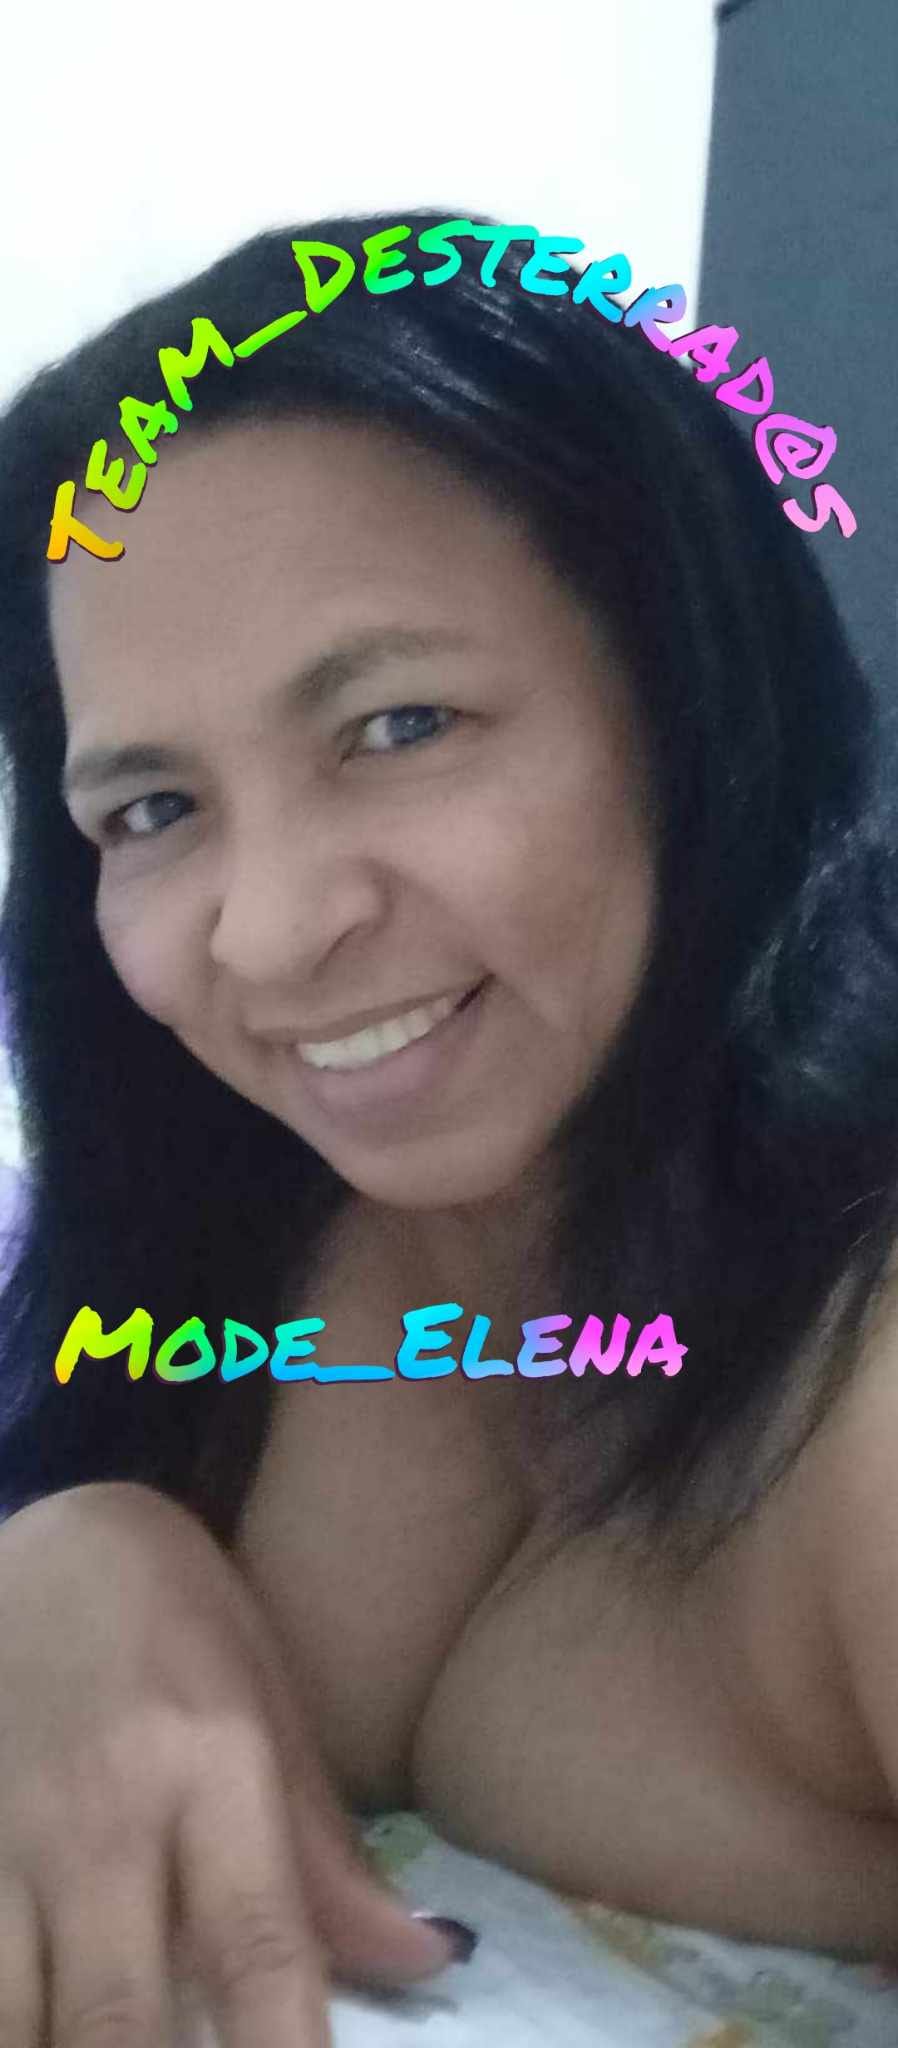 Elena Maya